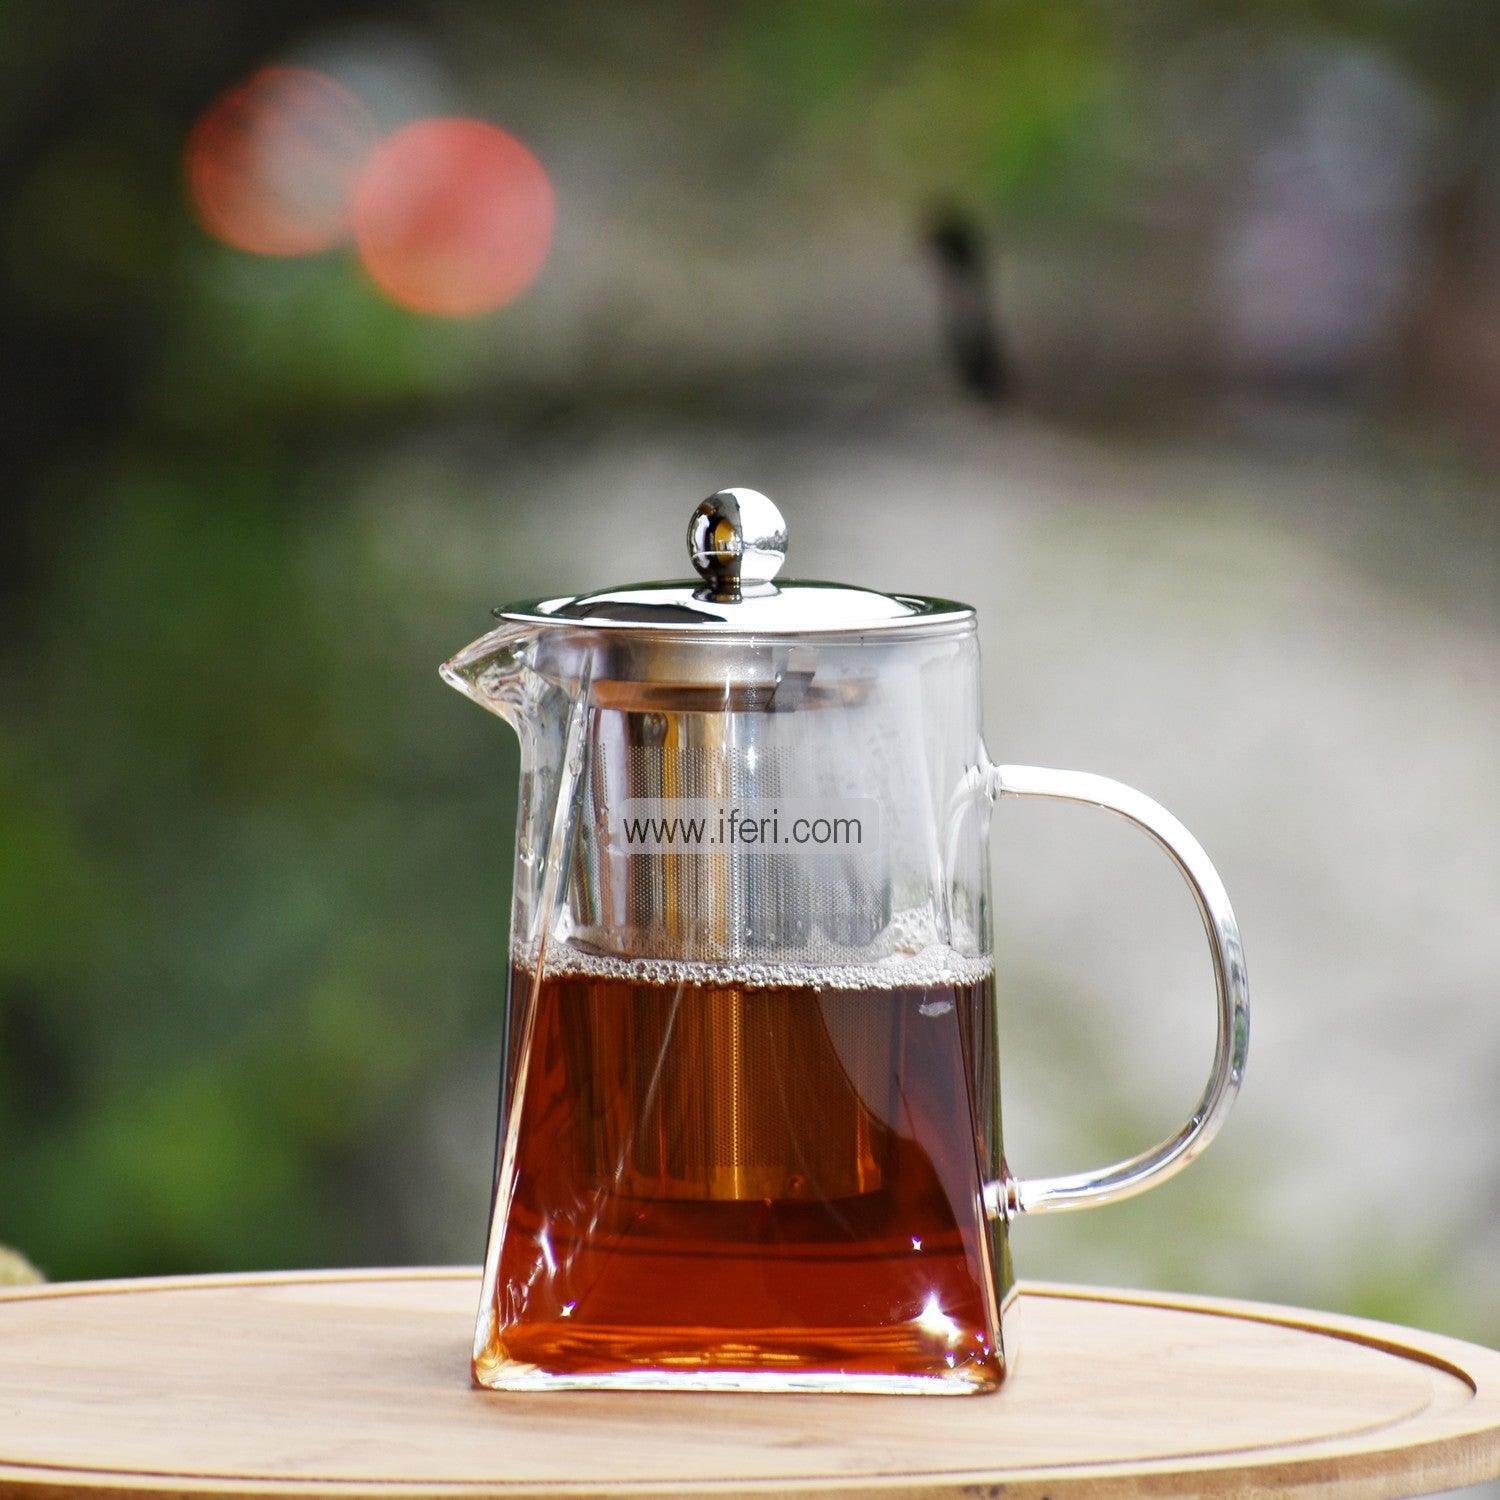 5 Inch Tempered Glass Tea Pot with Infuser EB6065 Price in Bangladesh - iferi.com